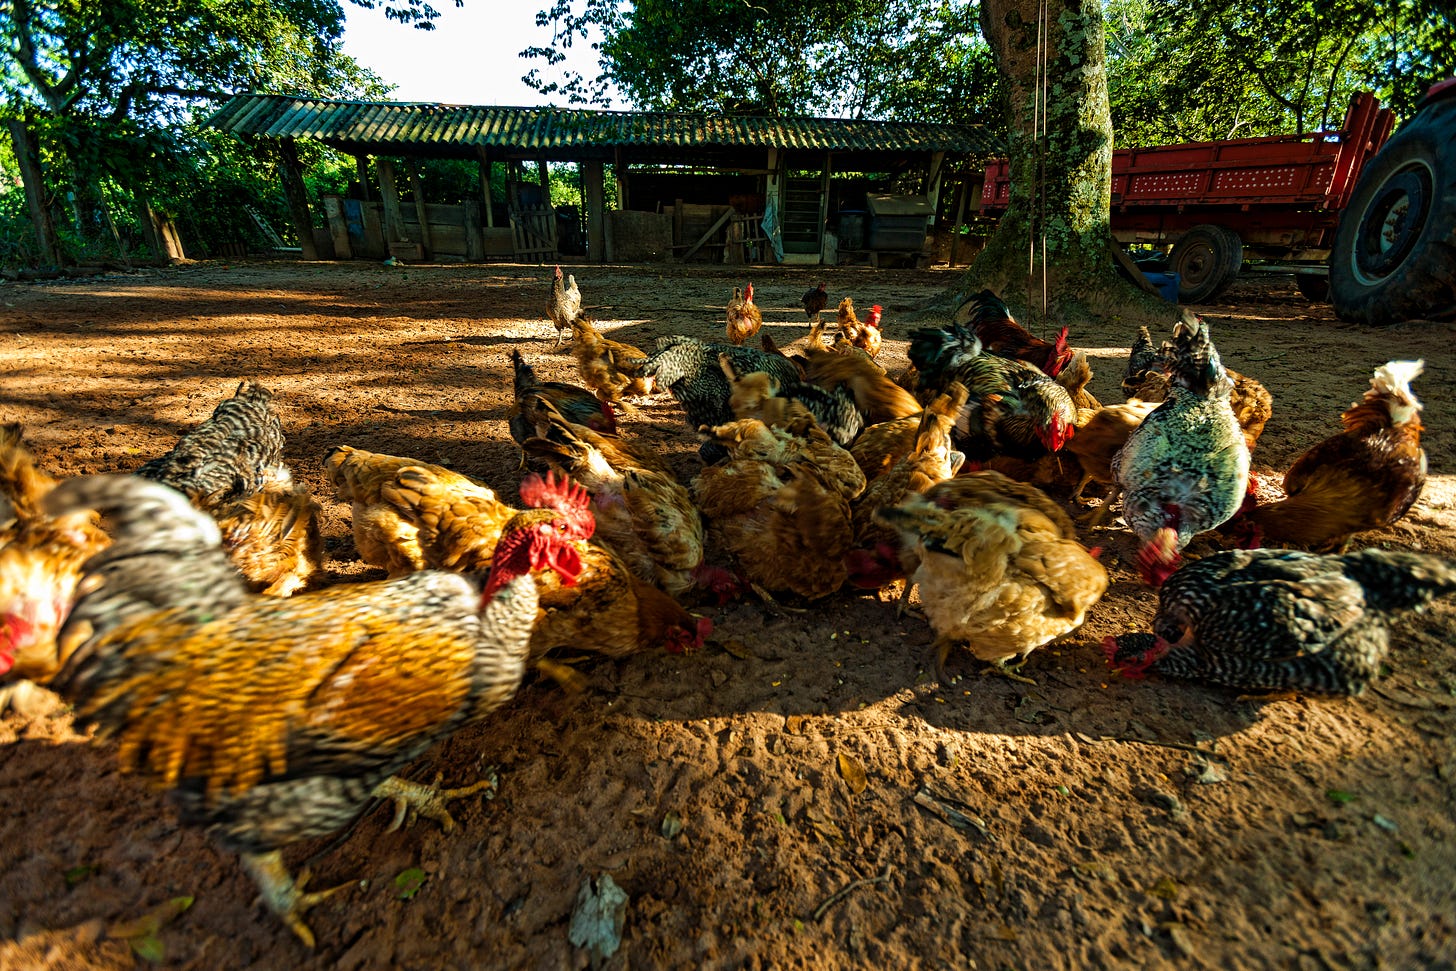 File:Free Range chickens feeding.jpg - Wikimedia Commons